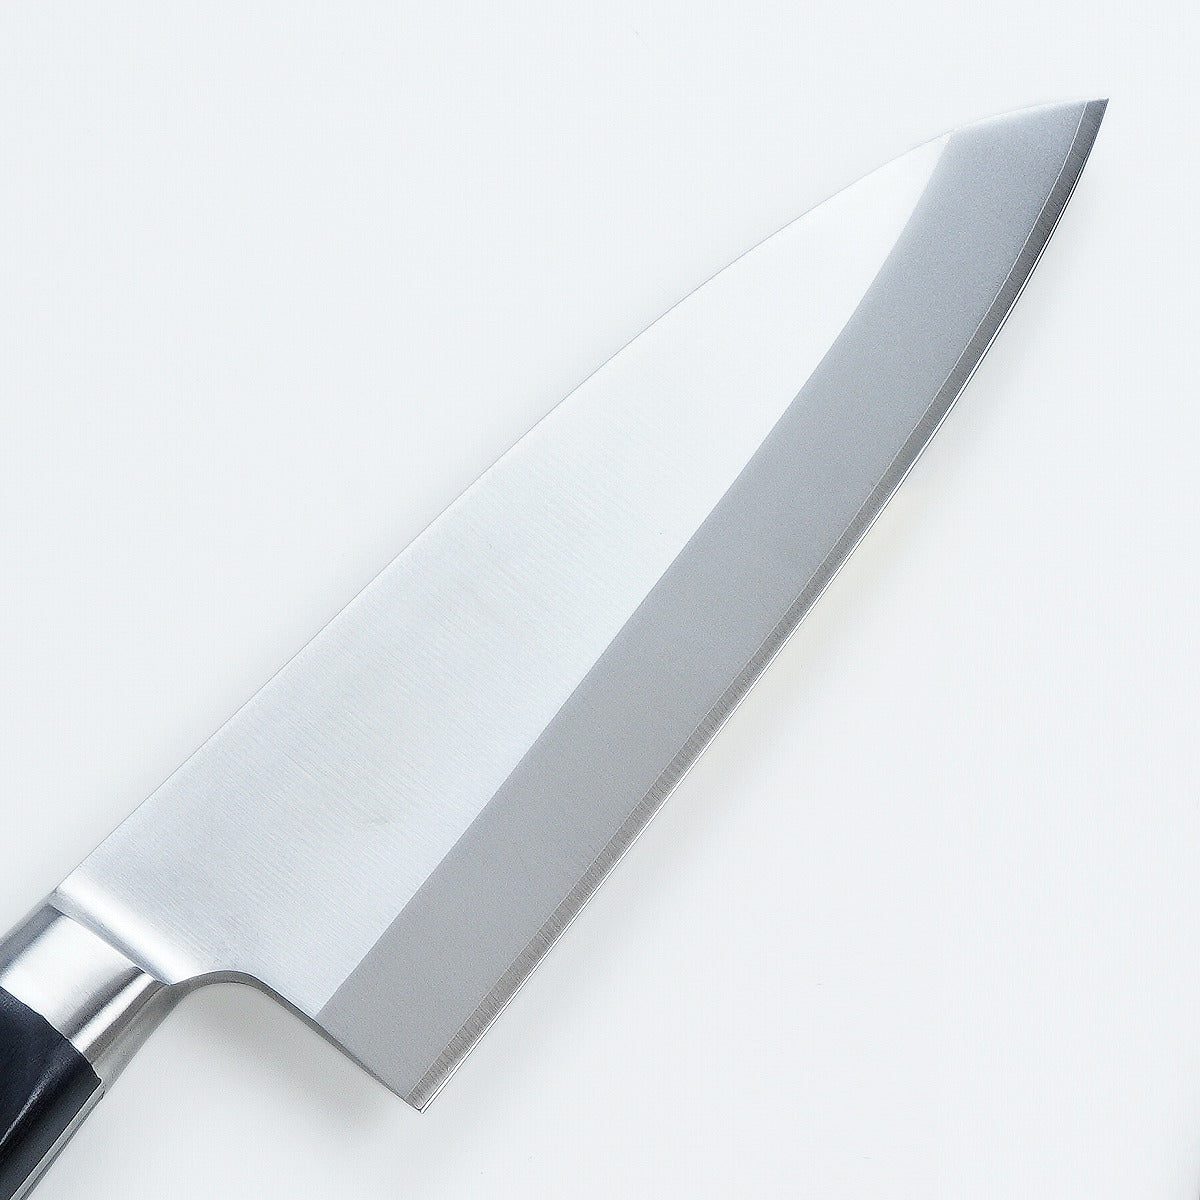 Deba (Butcher Knife) VG10, 135mm~150mm Garasuki 180mm